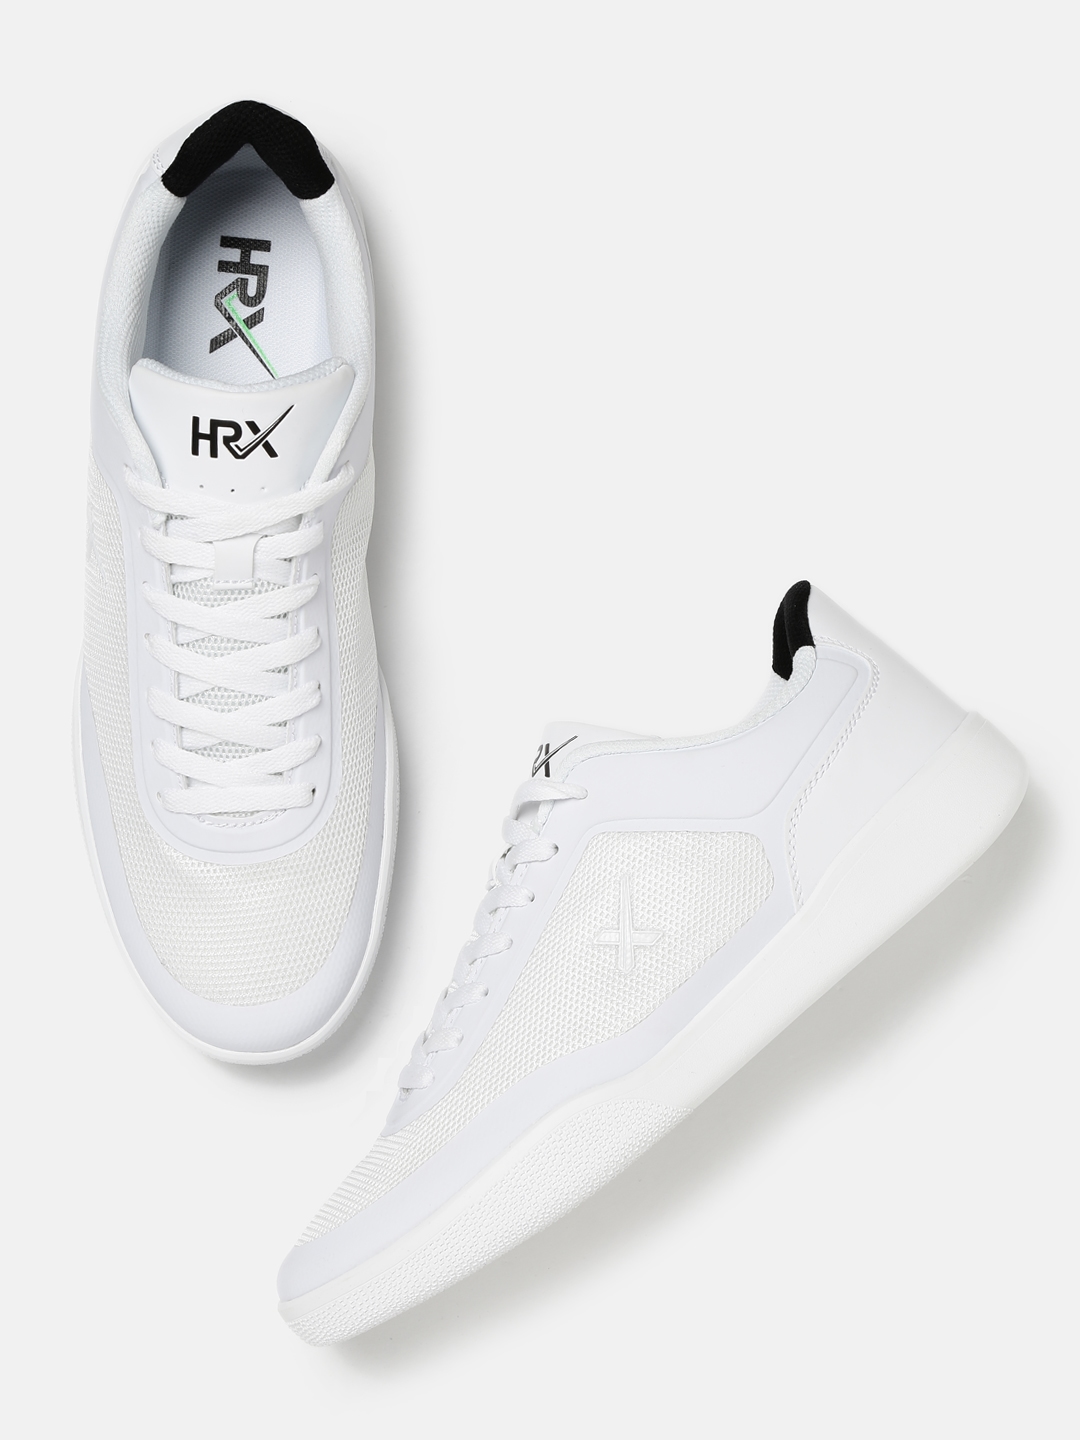 Buy HRX Men's Blue Running Shoes - 10 UK at Amazon.in